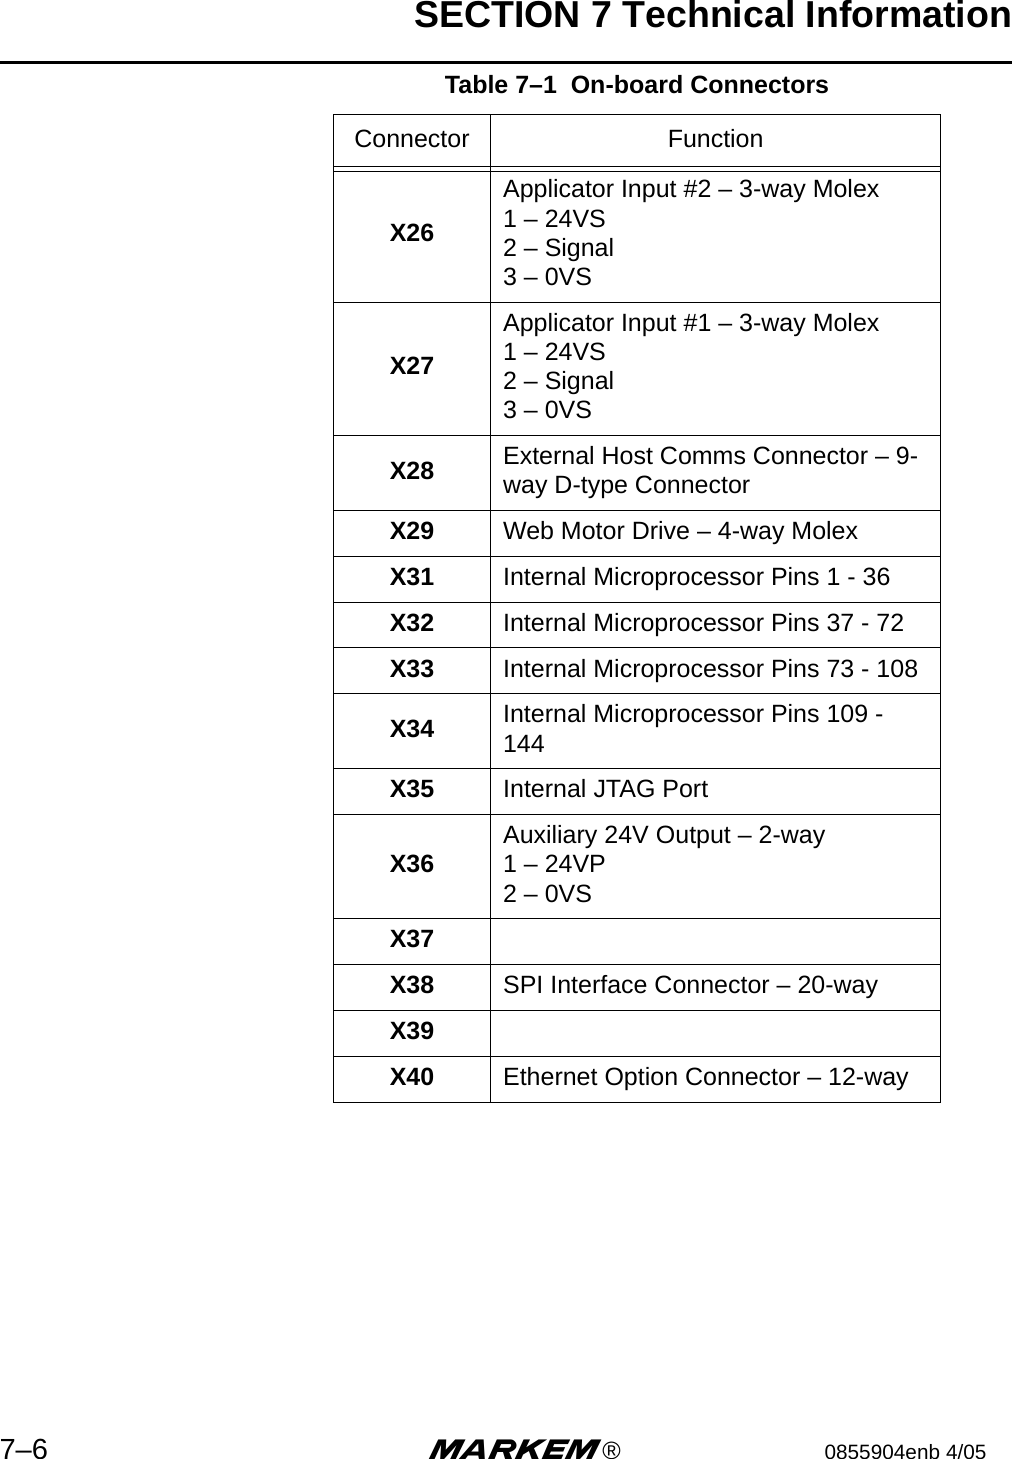 SECTION 7 Technical Information7–6 m®0855904enb 4/05 X26Applicator Input #2 – 3-way Molex1 – 24VS2 – Signal3 – 0VSX27Applicator Input #1 – 3-way Molex1 – 24VS2 – Signal 3 – 0VSX28 External Host Comms Connector – 9-way D-type ConnectorX29 Web Motor Drive – 4-way MolexX31 Internal Microprocessor Pins 1 - 36X32 Internal Microprocessor Pins 37 - 72X33 Internal Microprocessor Pins 73 - 108X34 Internal Microprocessor Pins 109 - 144X35 Internal JTAG PortX36 Auxiliary 24V Output – 2-way1 – 24VP2 – 0VSX37X38 SPI Interface Connector – 20-wayX39X40 Ethernet Option Connector – 12-wayTable 7–1  On-board ConnectorsConnector Function